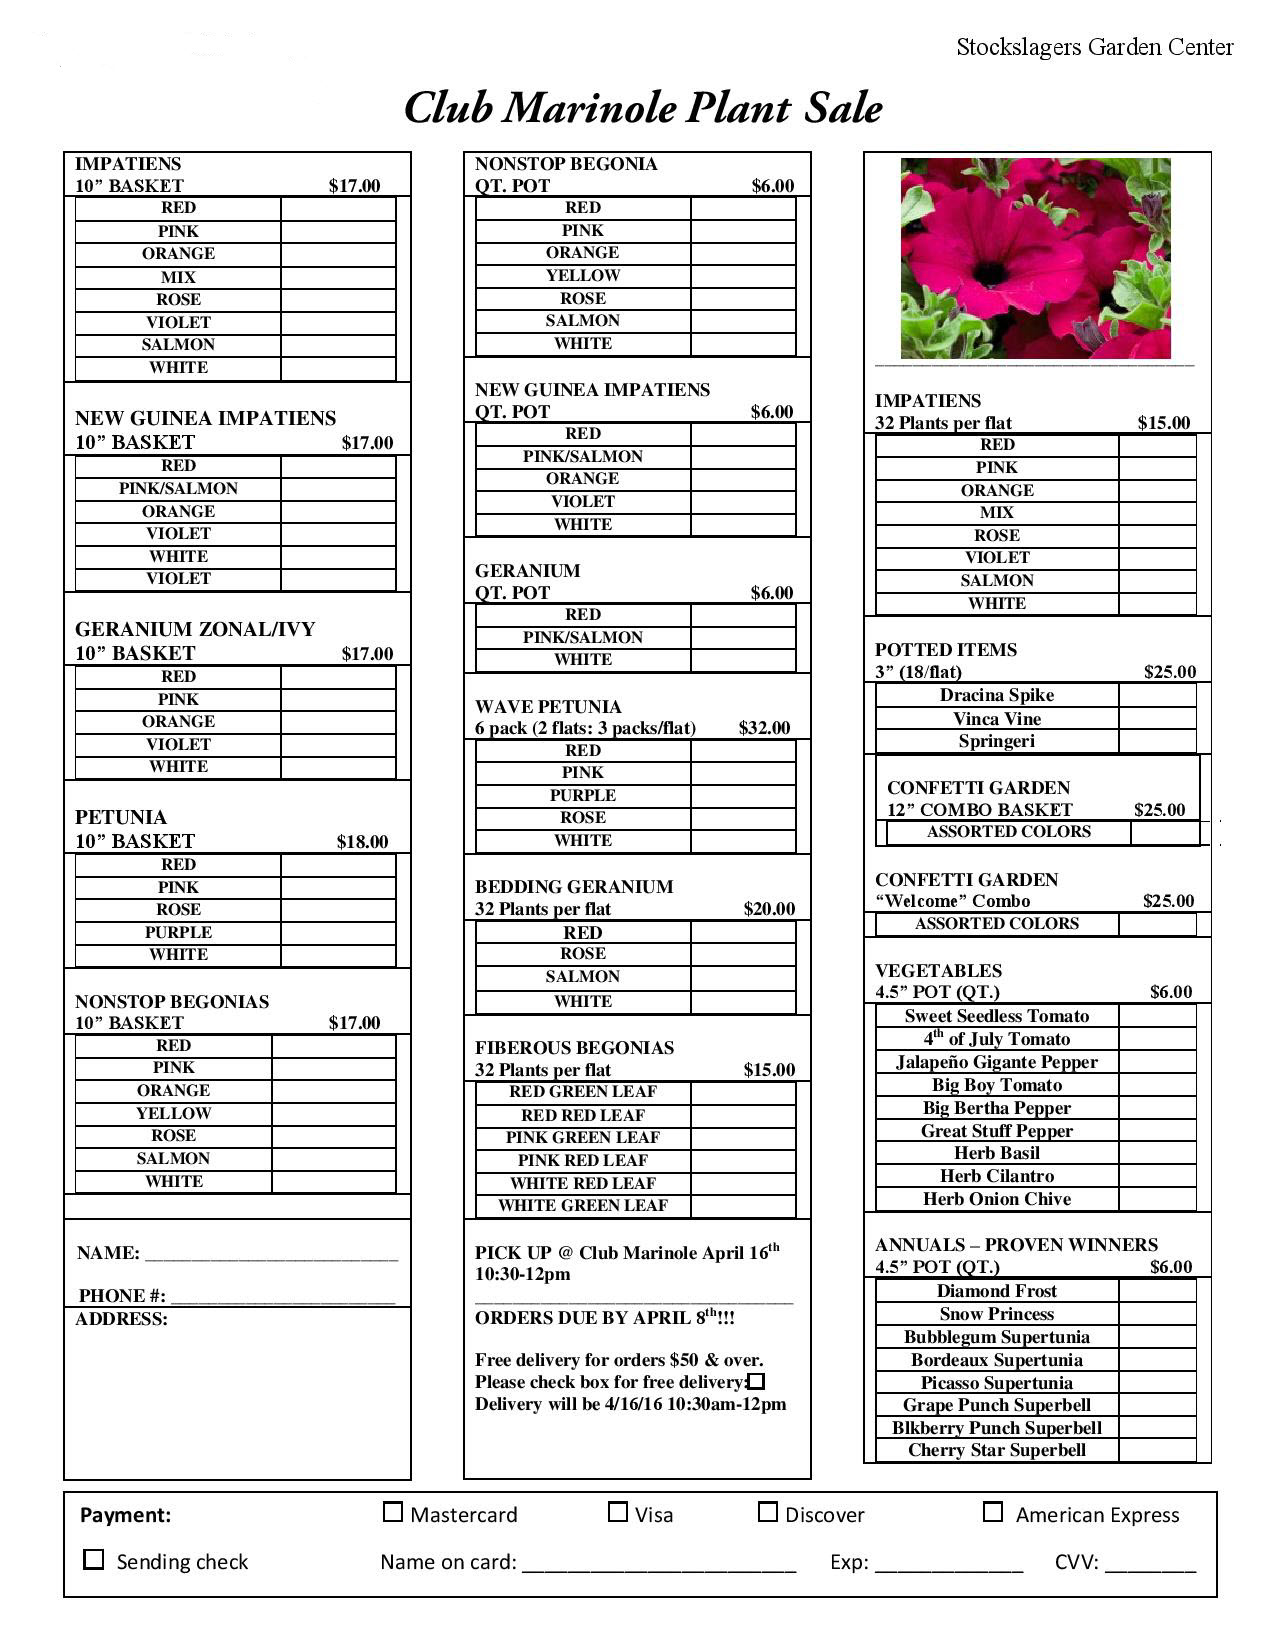 Club Marinole Flower Sale1